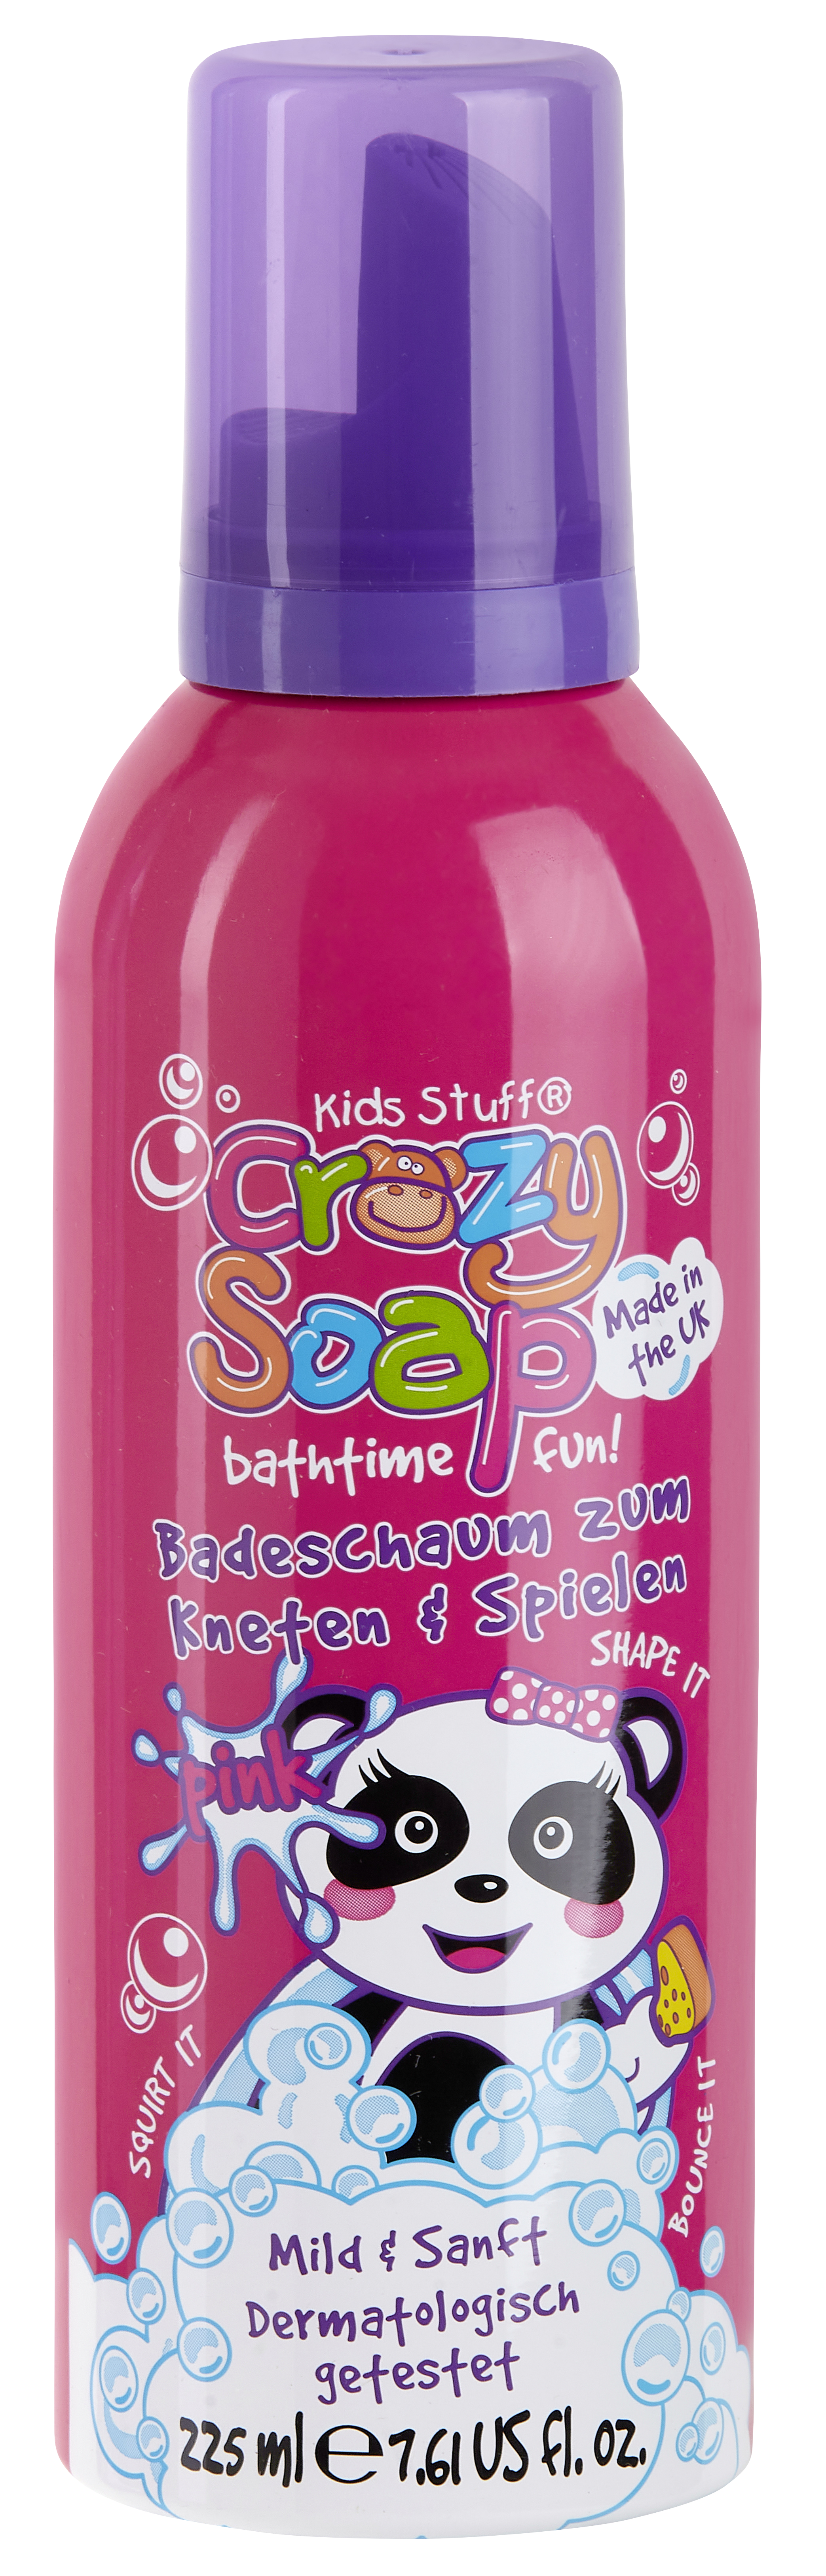 Kids Stuff Crazy Soap Formbarer Kinderbadeschaum pink 225ml